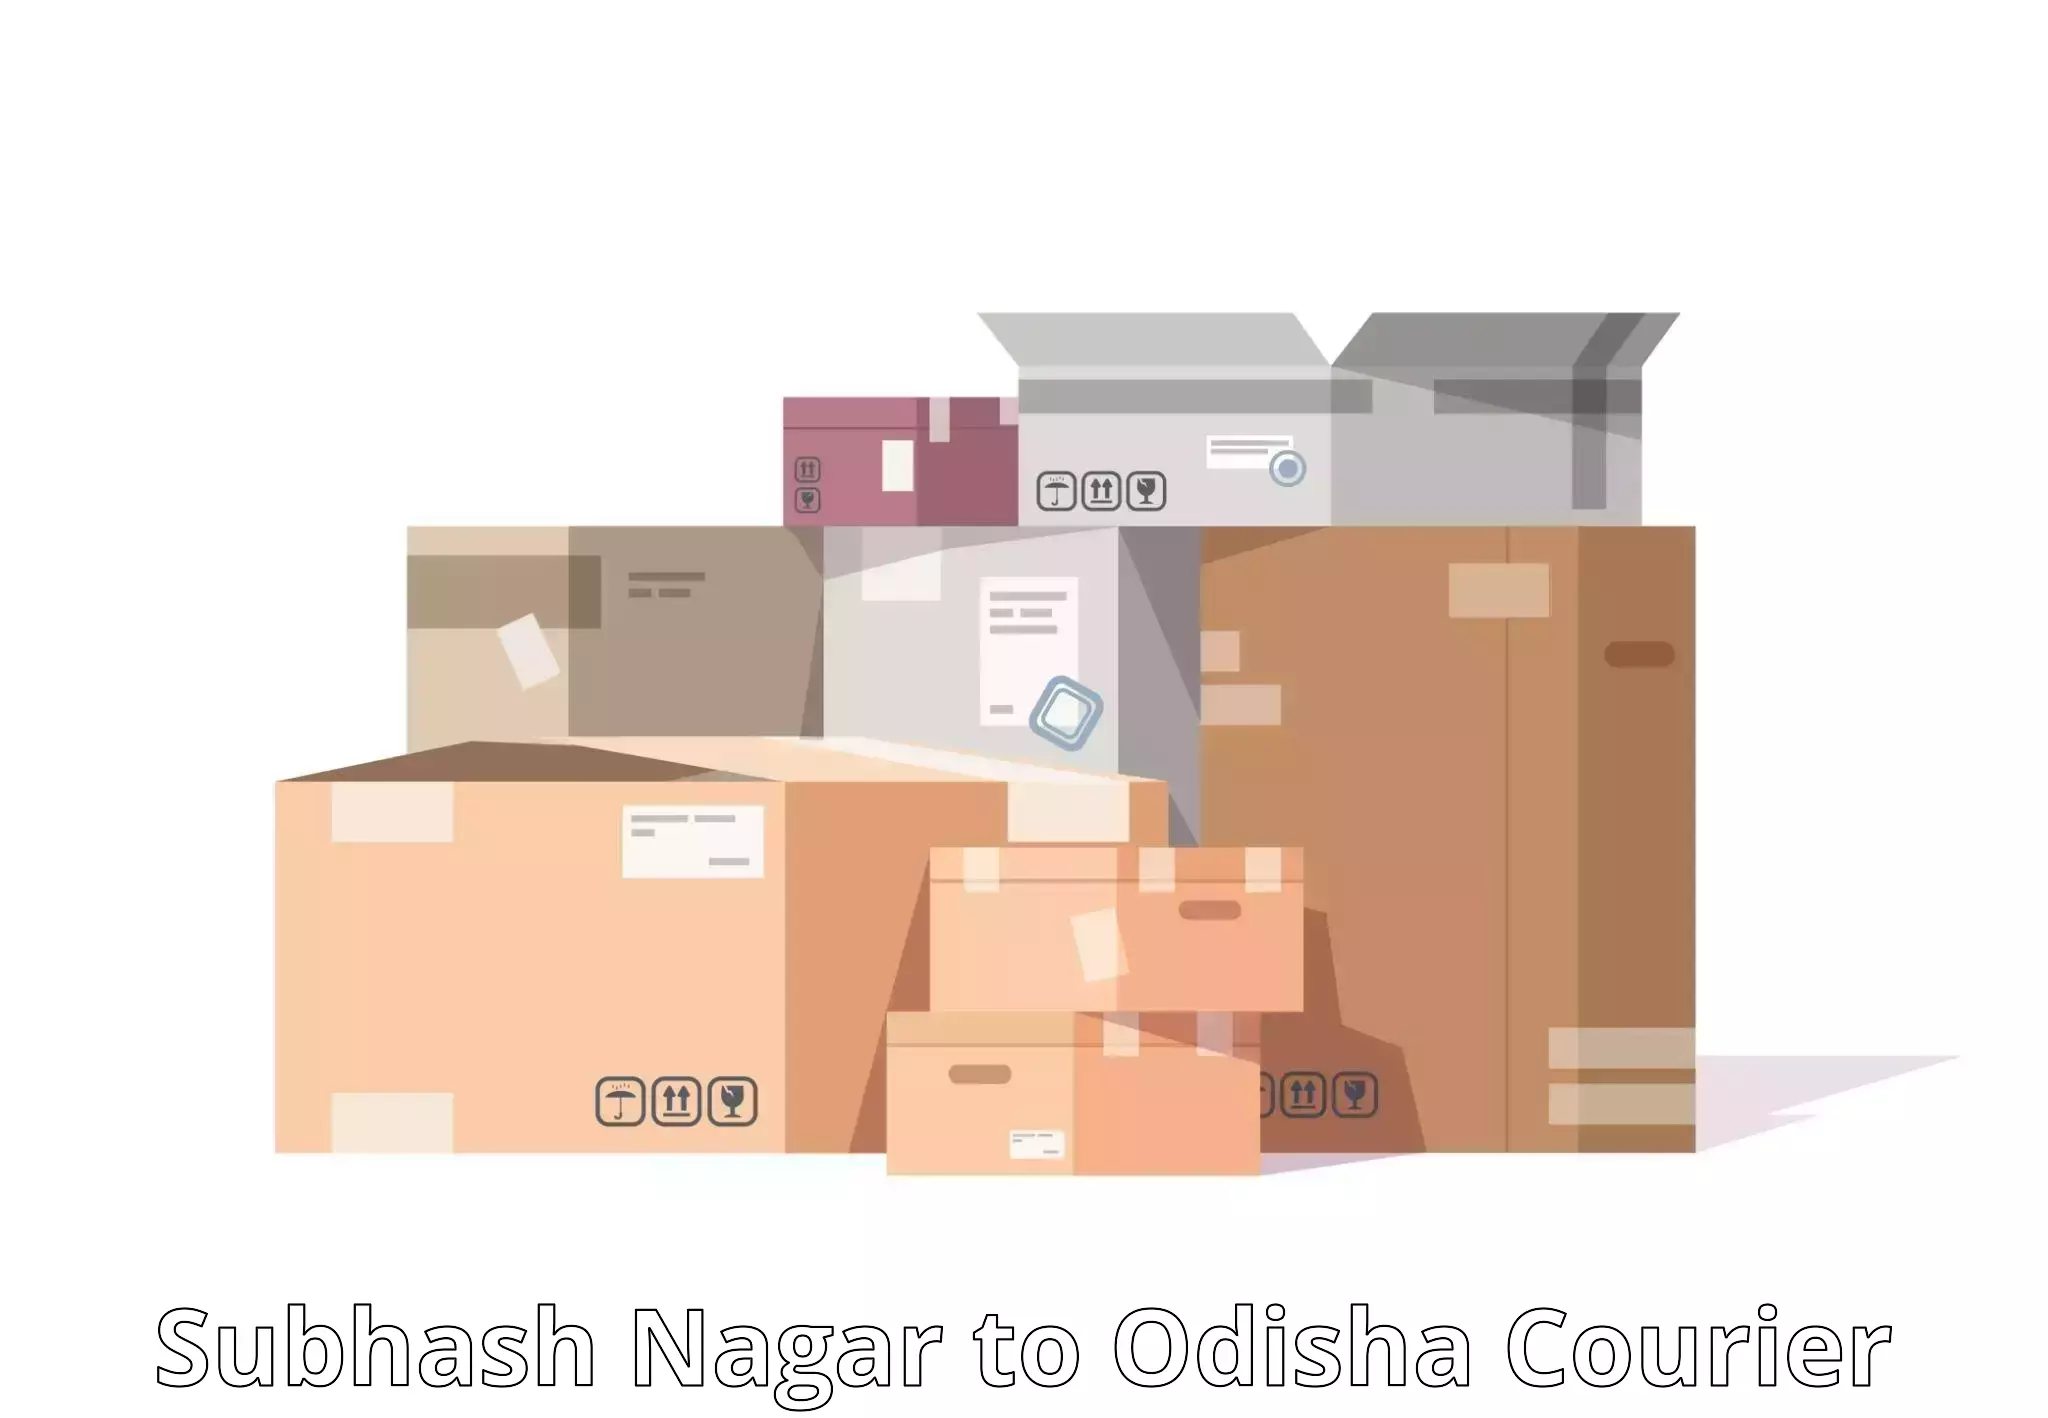 Sustainable shipping practices Subhash Nagar to Asika